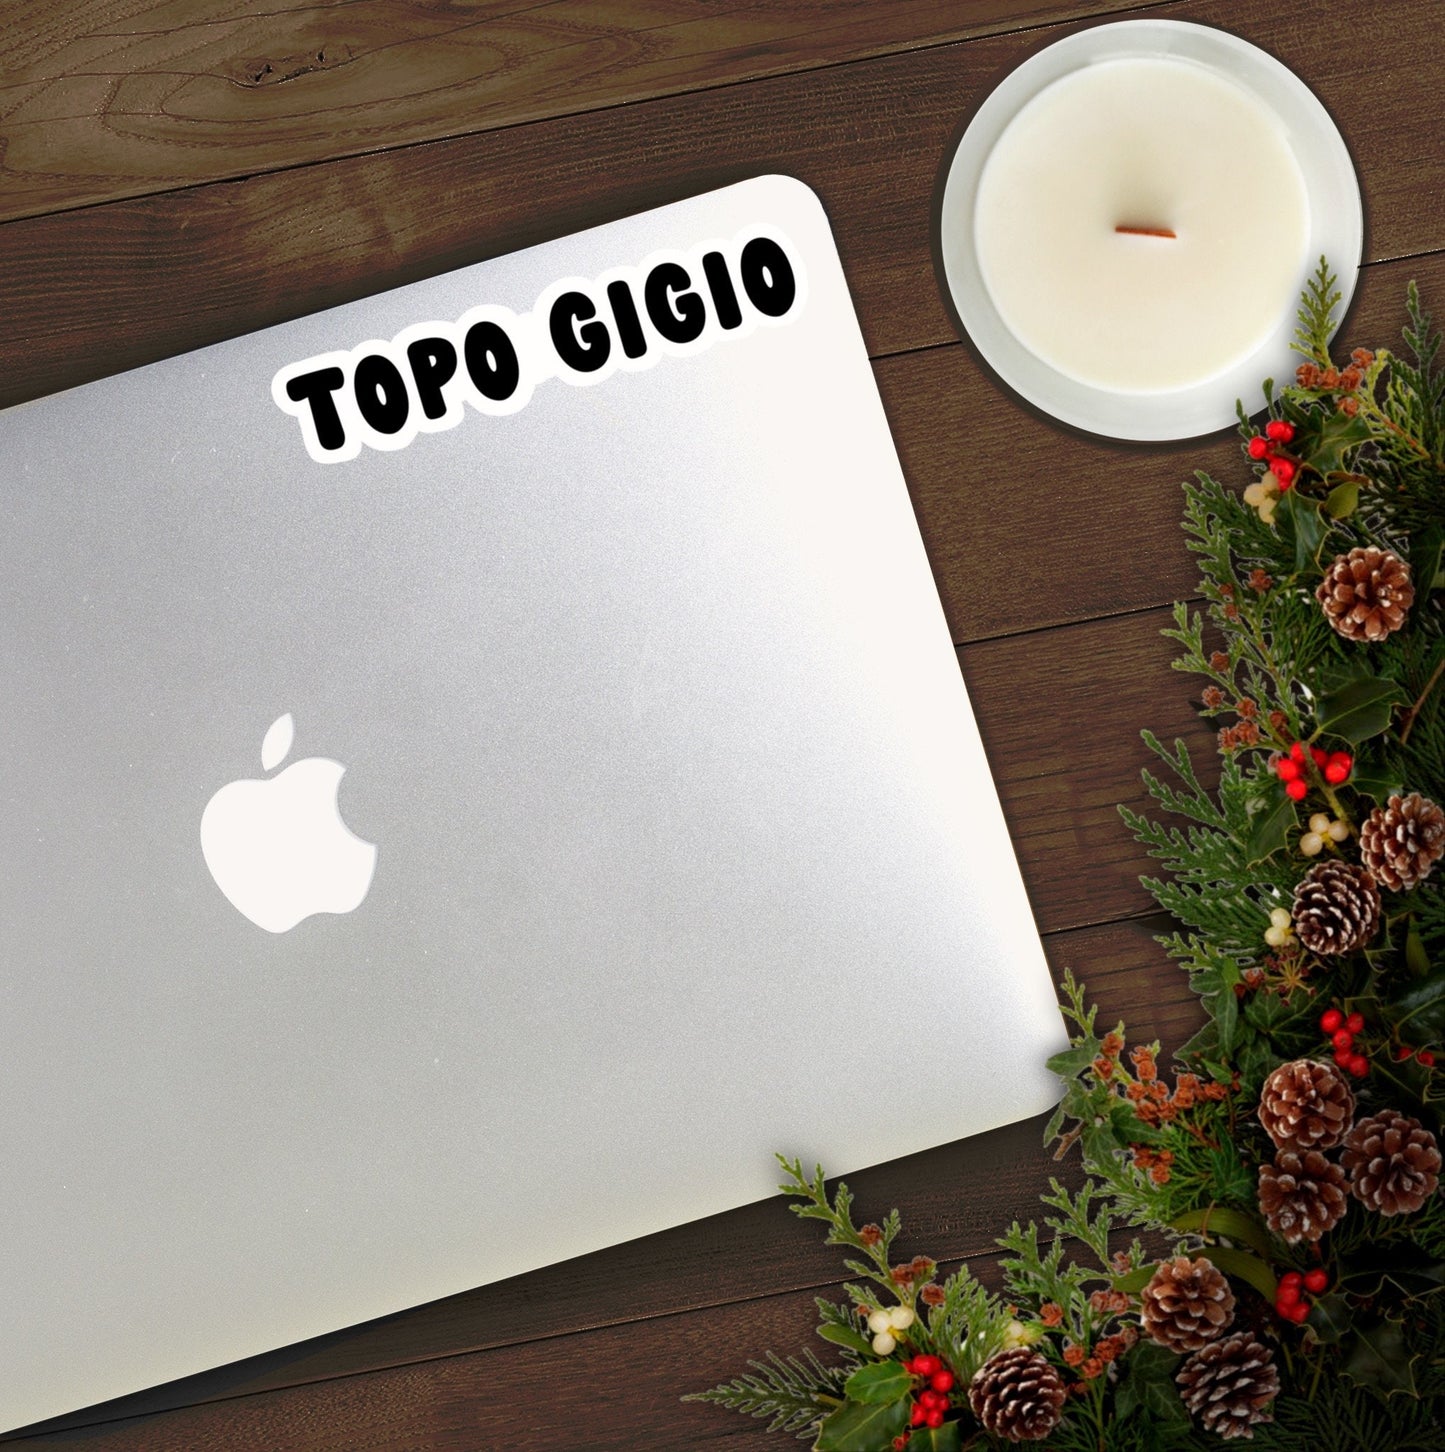 Too Gigio | The Santa Clause Stickers